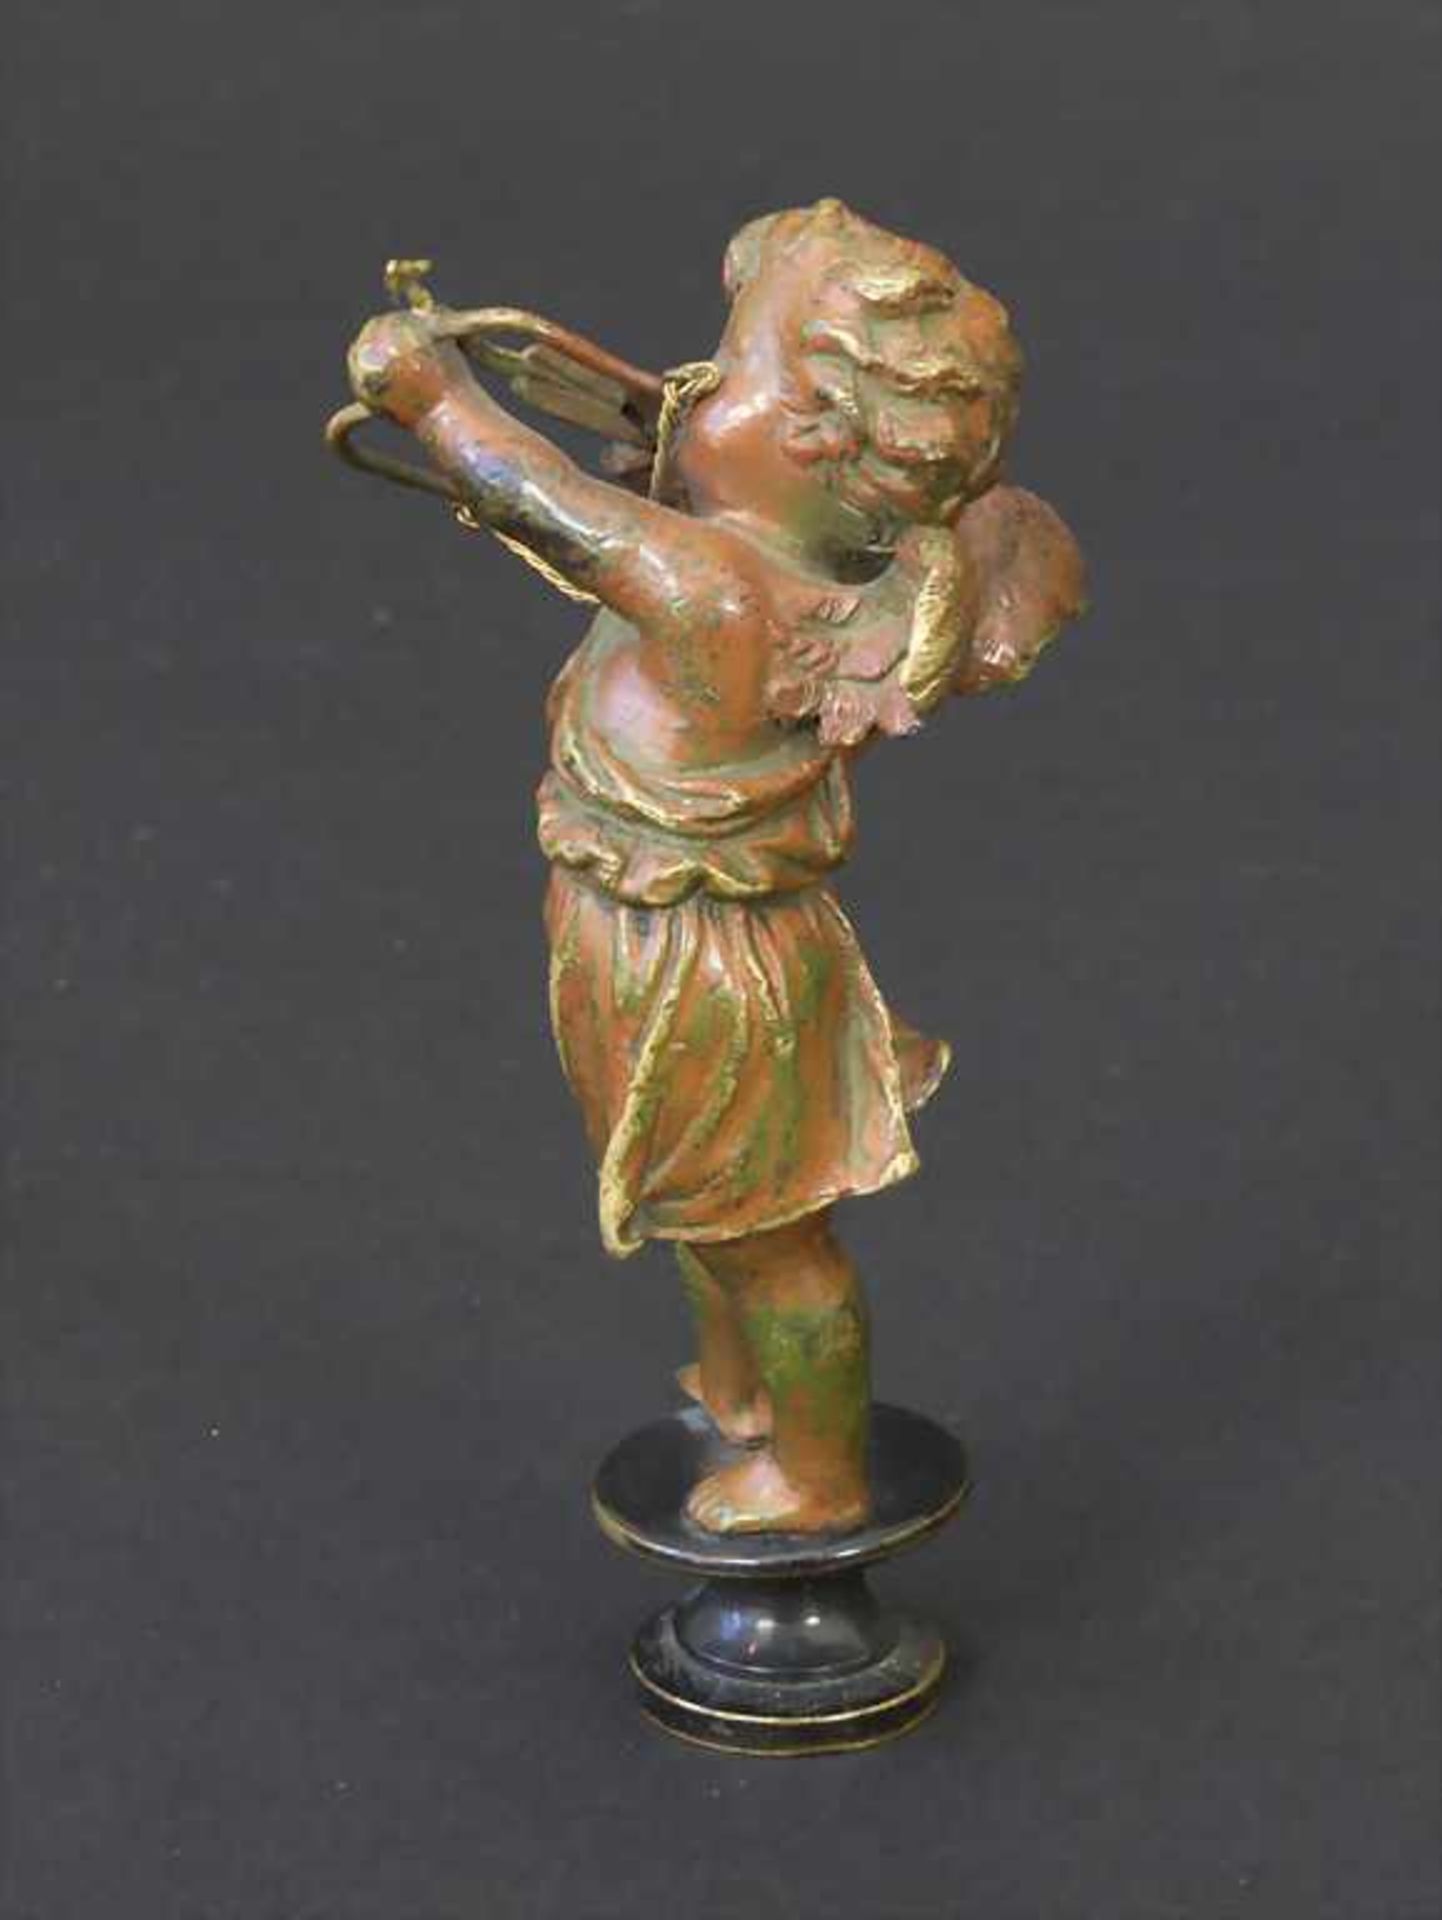 Amorette Petschaft / A seal (cupid), deutsch, um 1900Material: Bronze farbig gefasst,Höhe: 8,5 cm, - Bild 2 aus 3